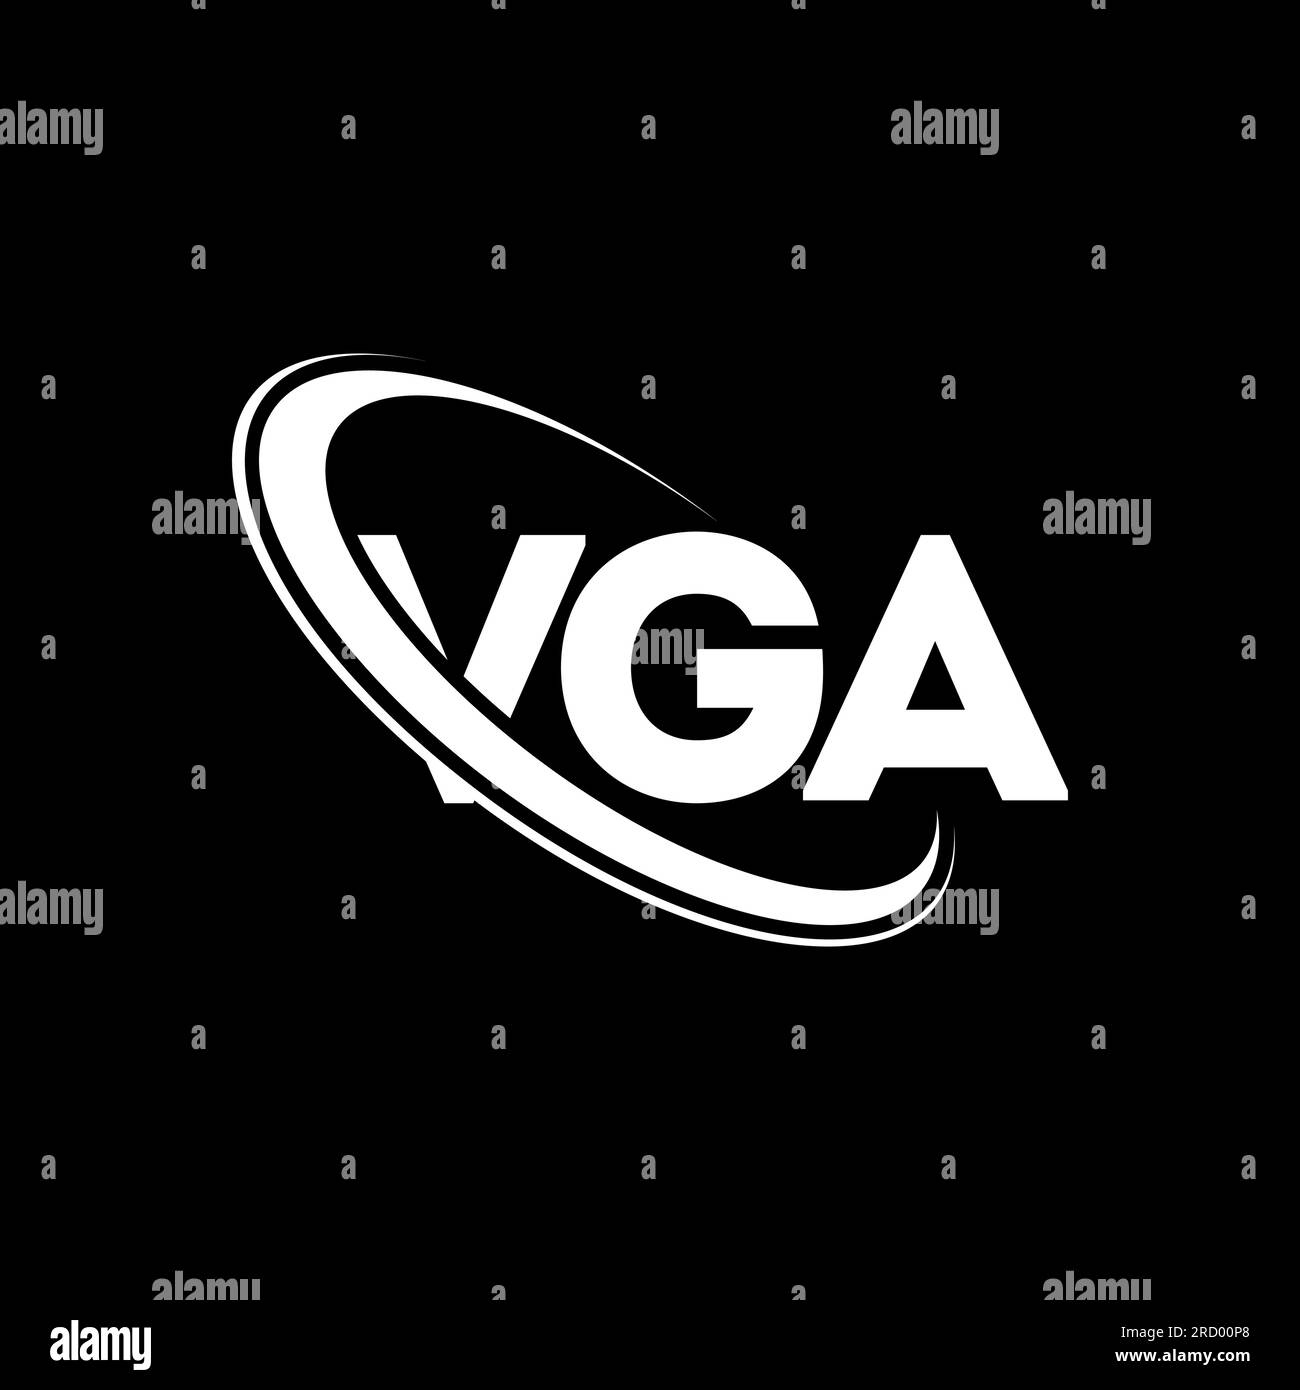 VGA logo. VGA letter. VGA letter logo design. Initials VGA logo linked with circle and uppercase monogram logo. VGA typography for technology, busines Stock Vector